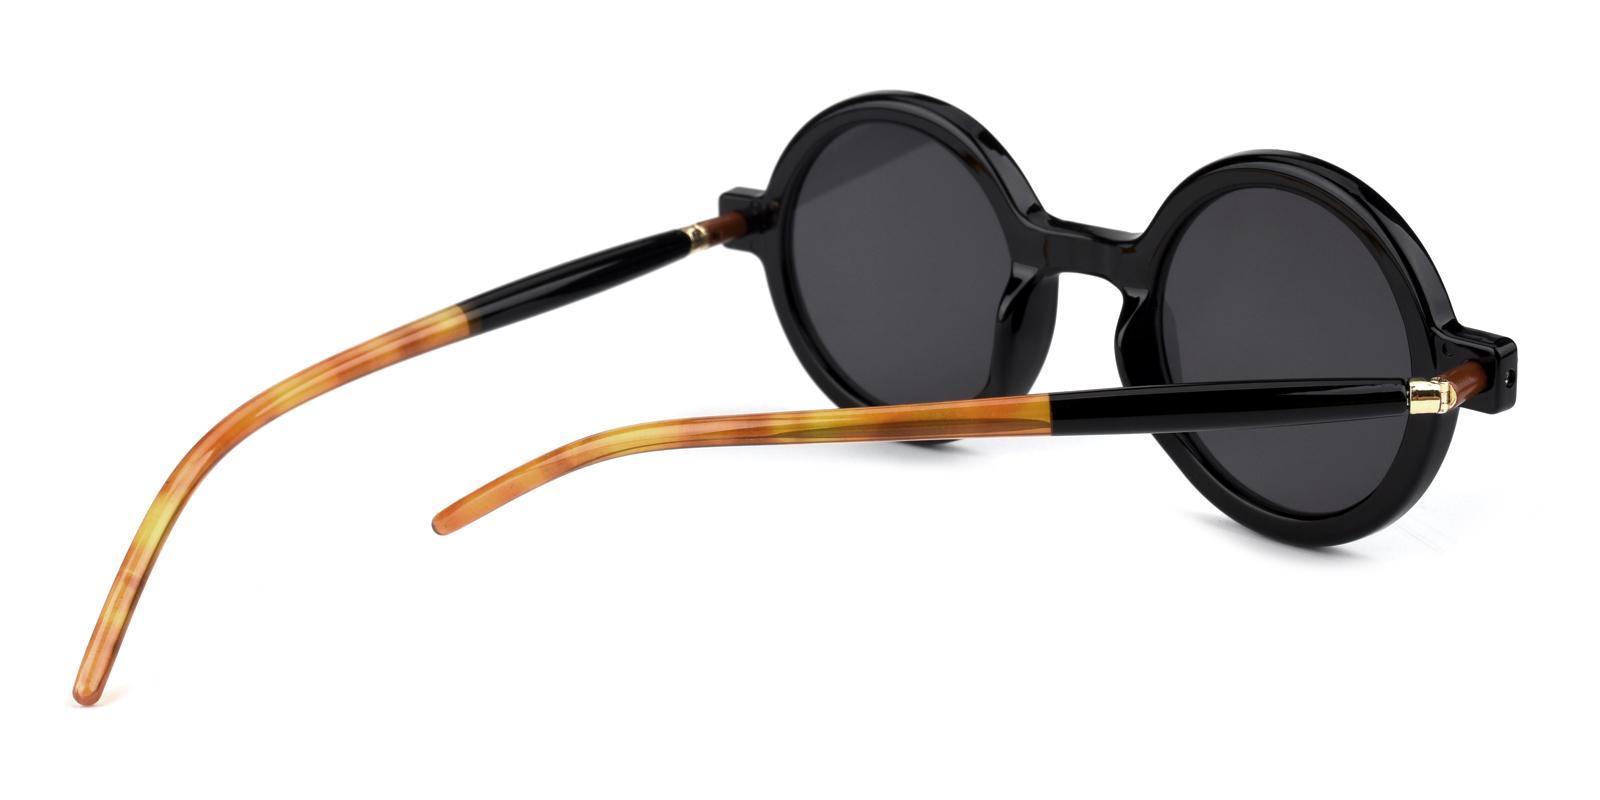 Palmer-Black-Round-Plastic-Sunglasses-detail